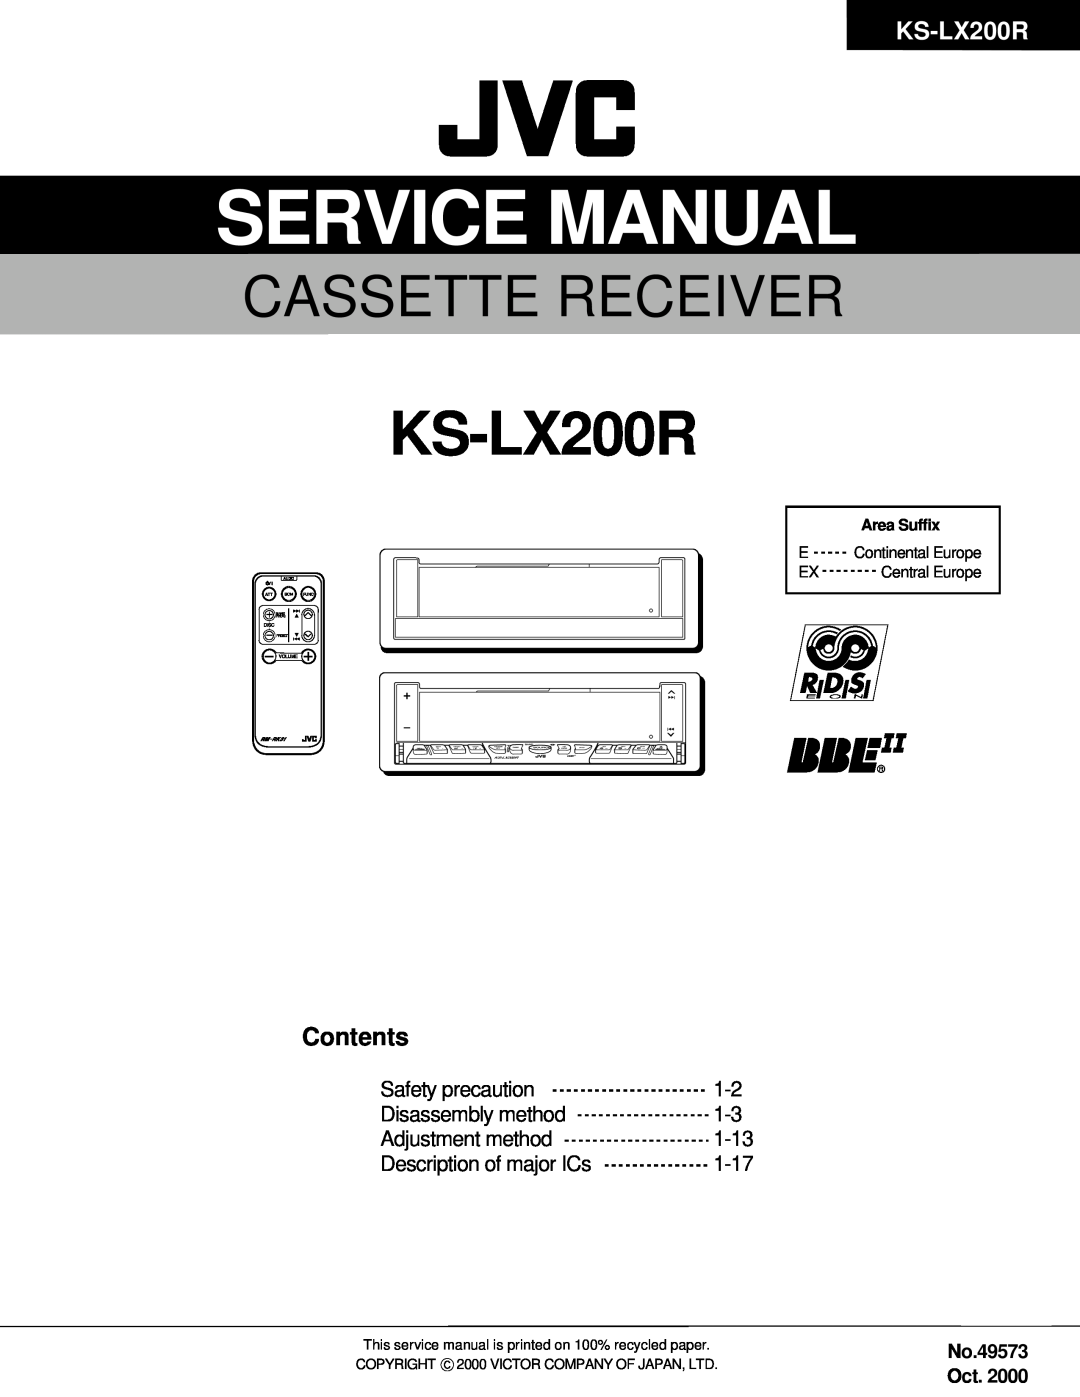 JVC KS-LX200R service manual Safety precaution, Disassembly method, Adjustment method, Description of major ICs, 1-13 